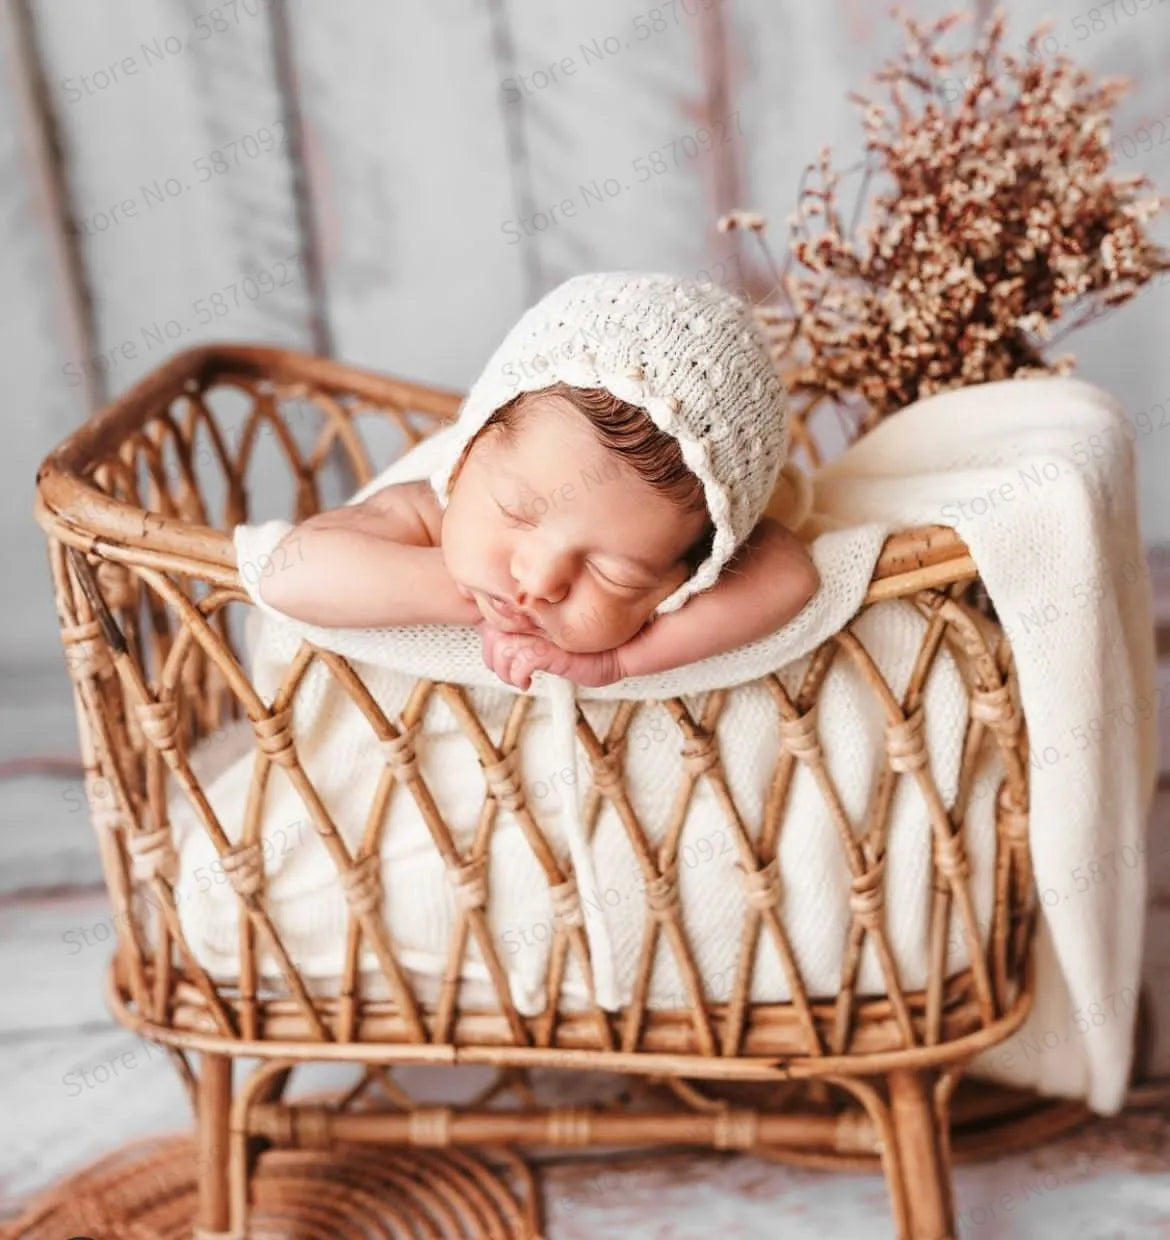 Newborn Photography Props Baby Basket Vintage Rattan Baby Bed Weaving Baskets Wooden Crib for Newborn Photo Shoot Furniture